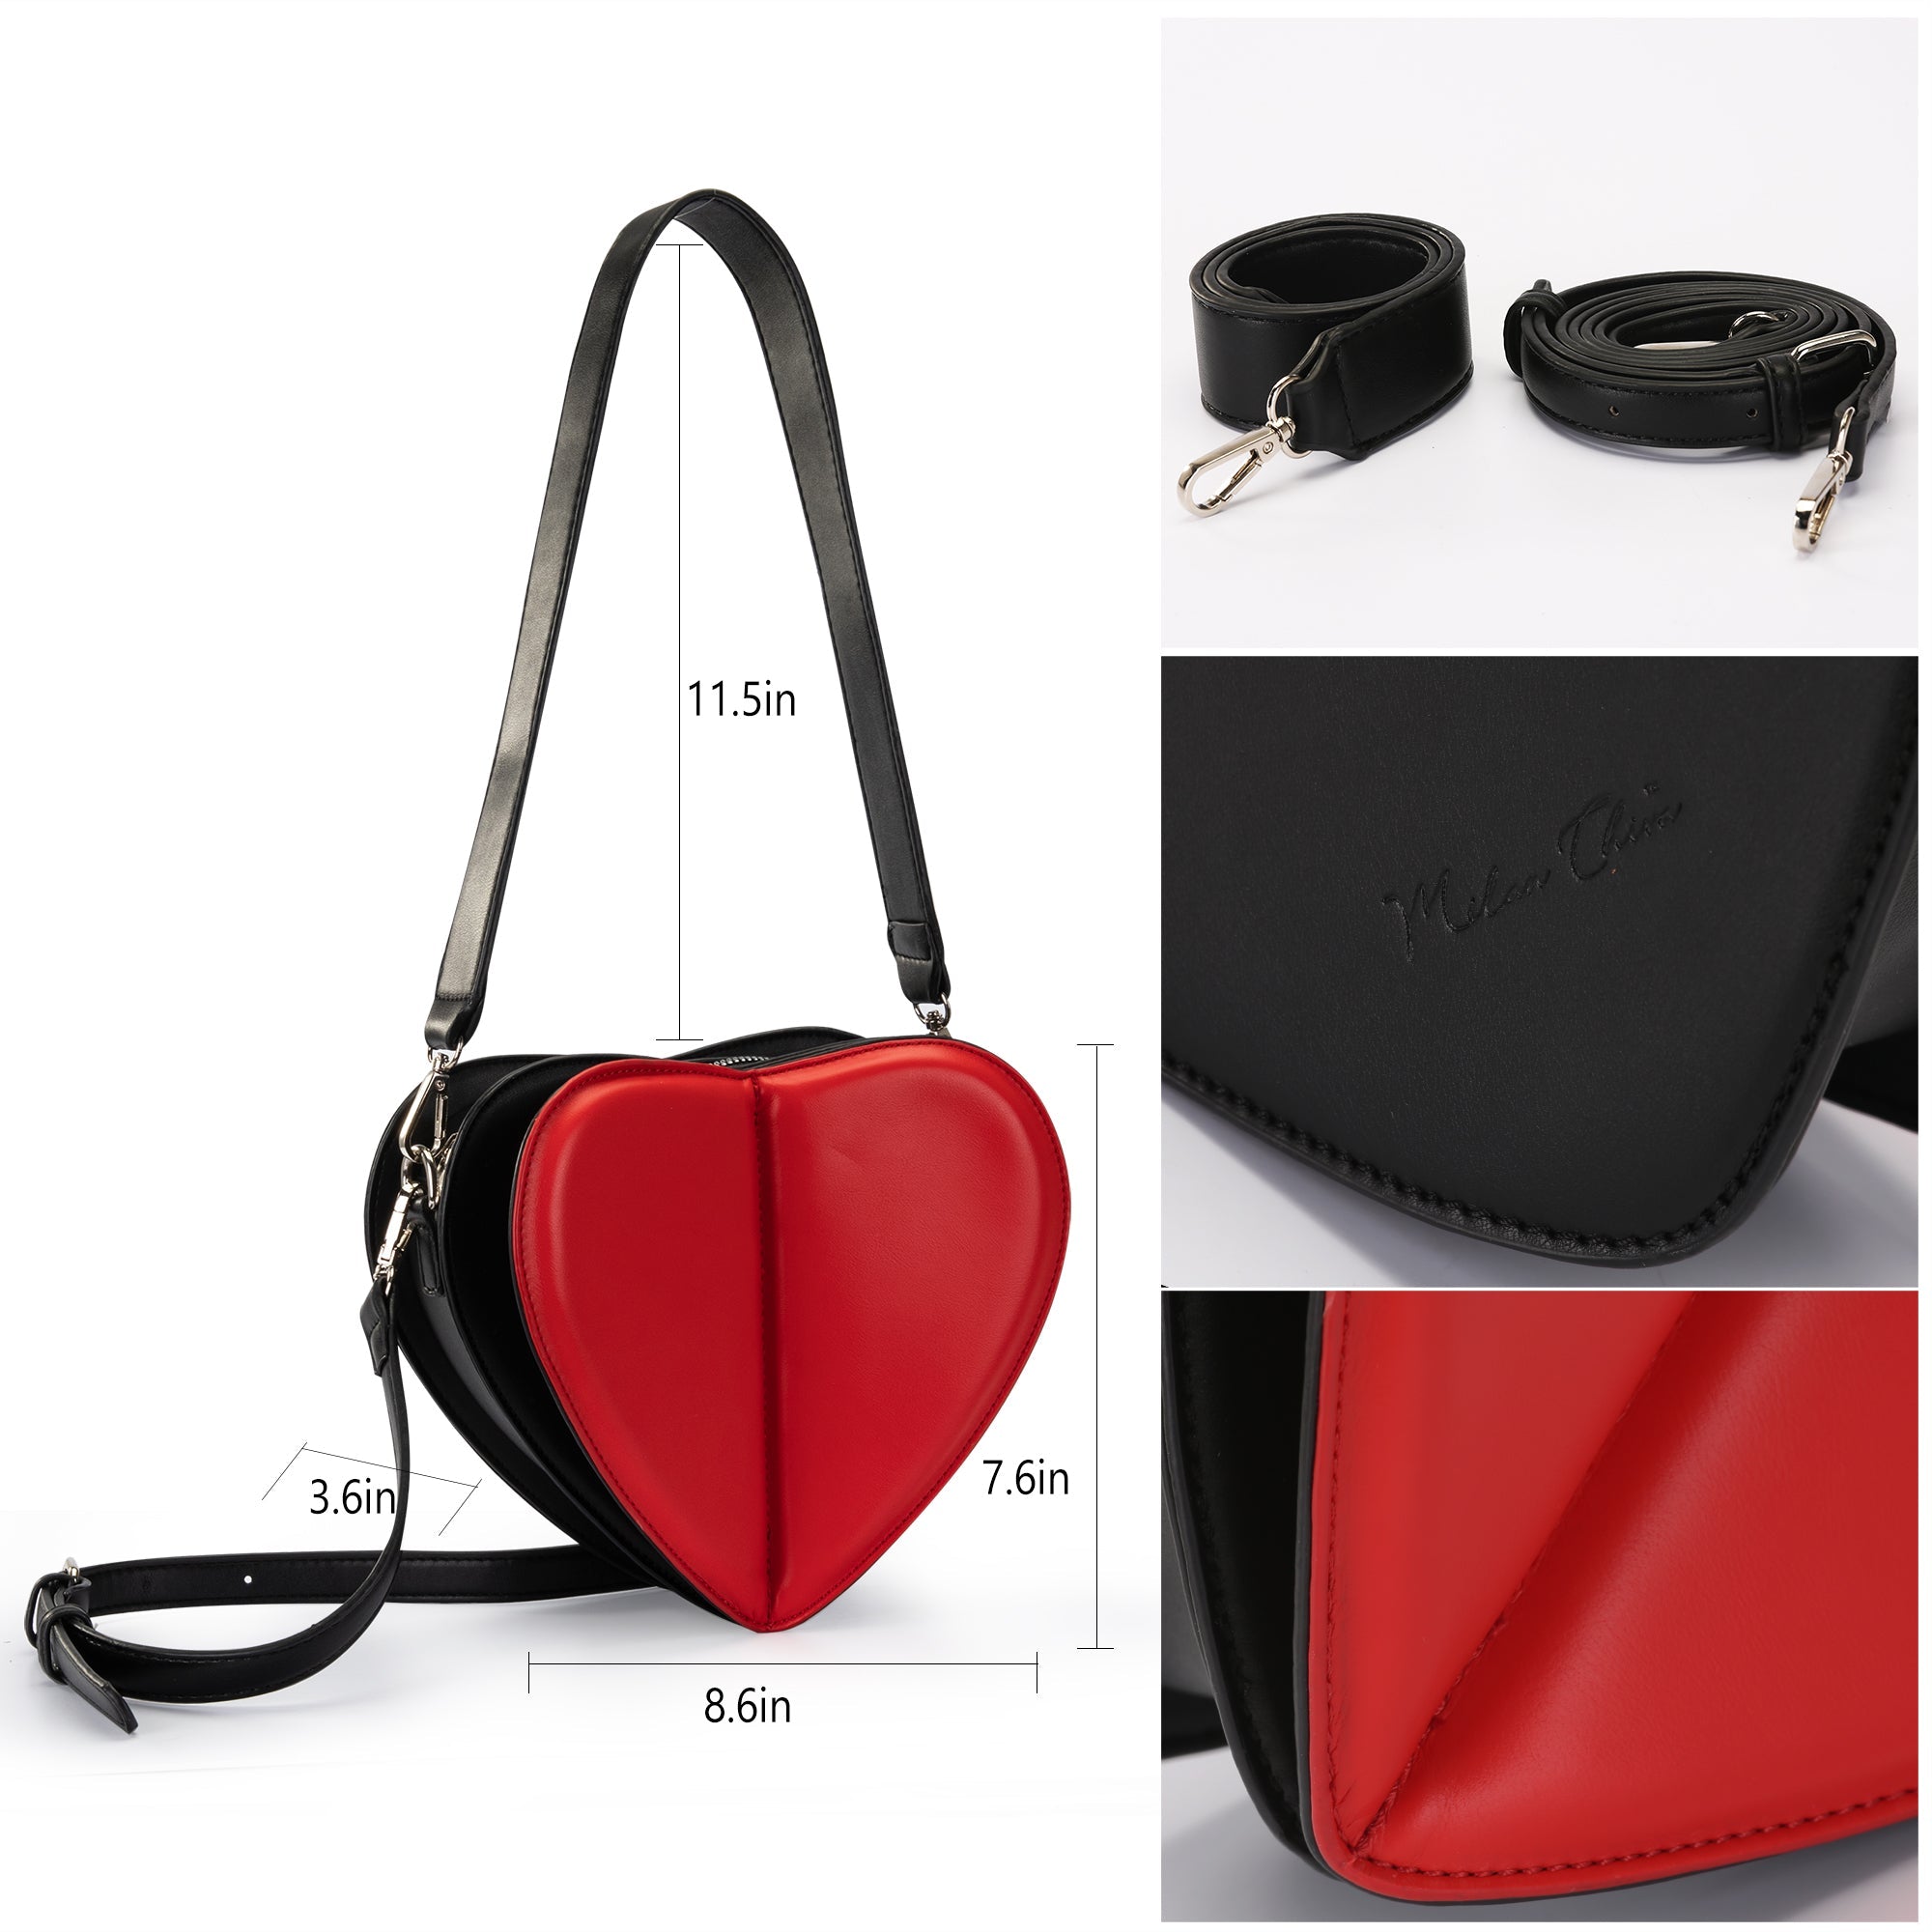 MC-1024 Milan Chiva Heart Shaped Mini Clutch/Crossbody Bag - Cowgirl Wear